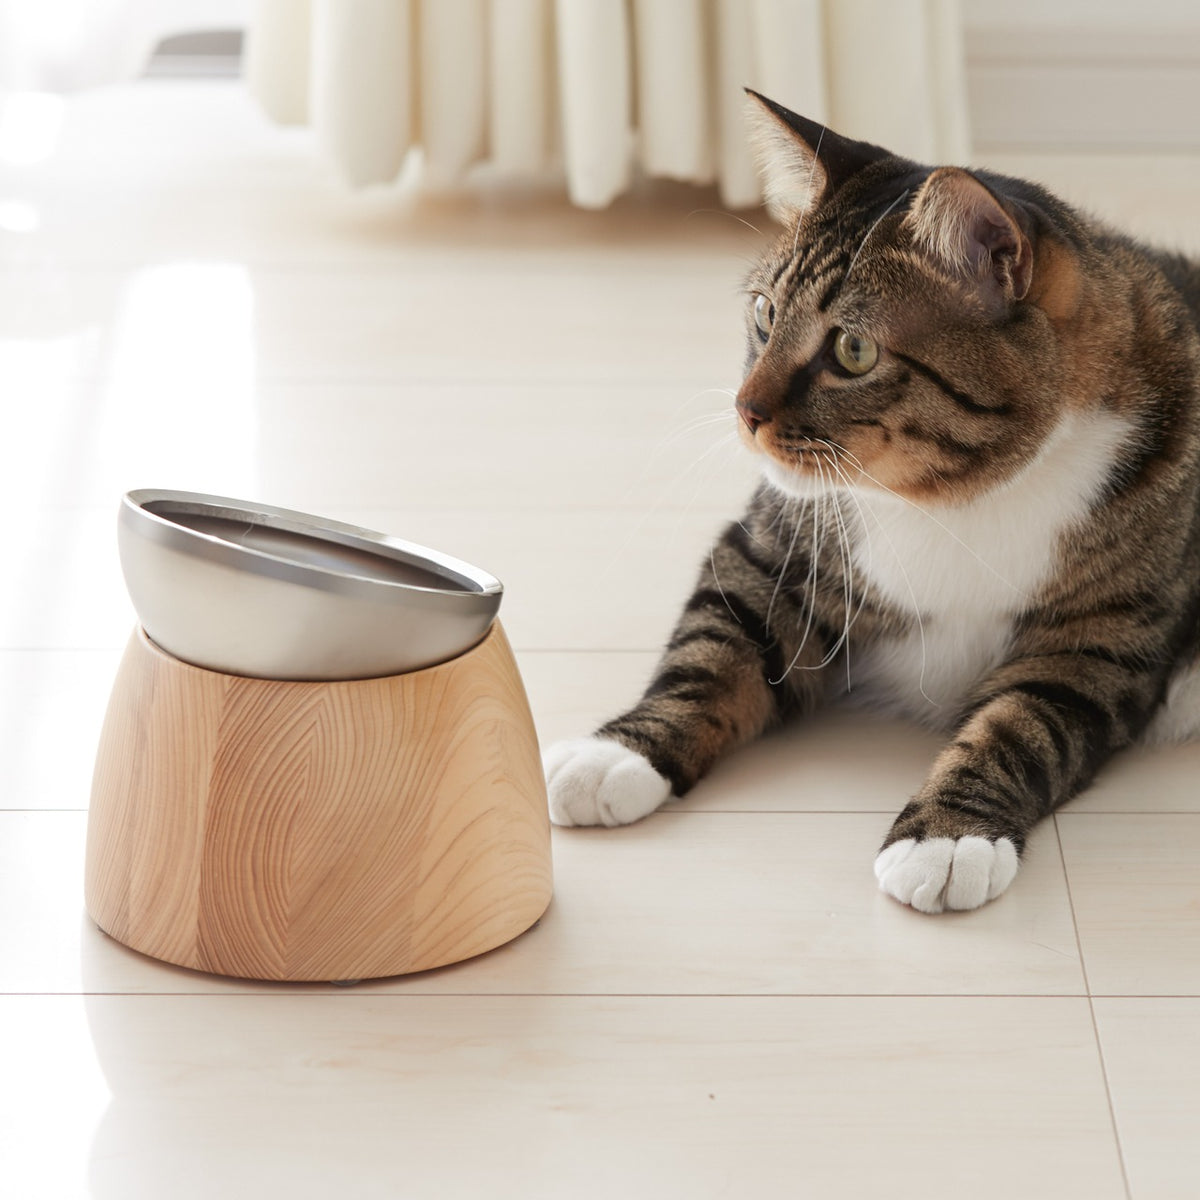 Precision-crafted Pet Bowl